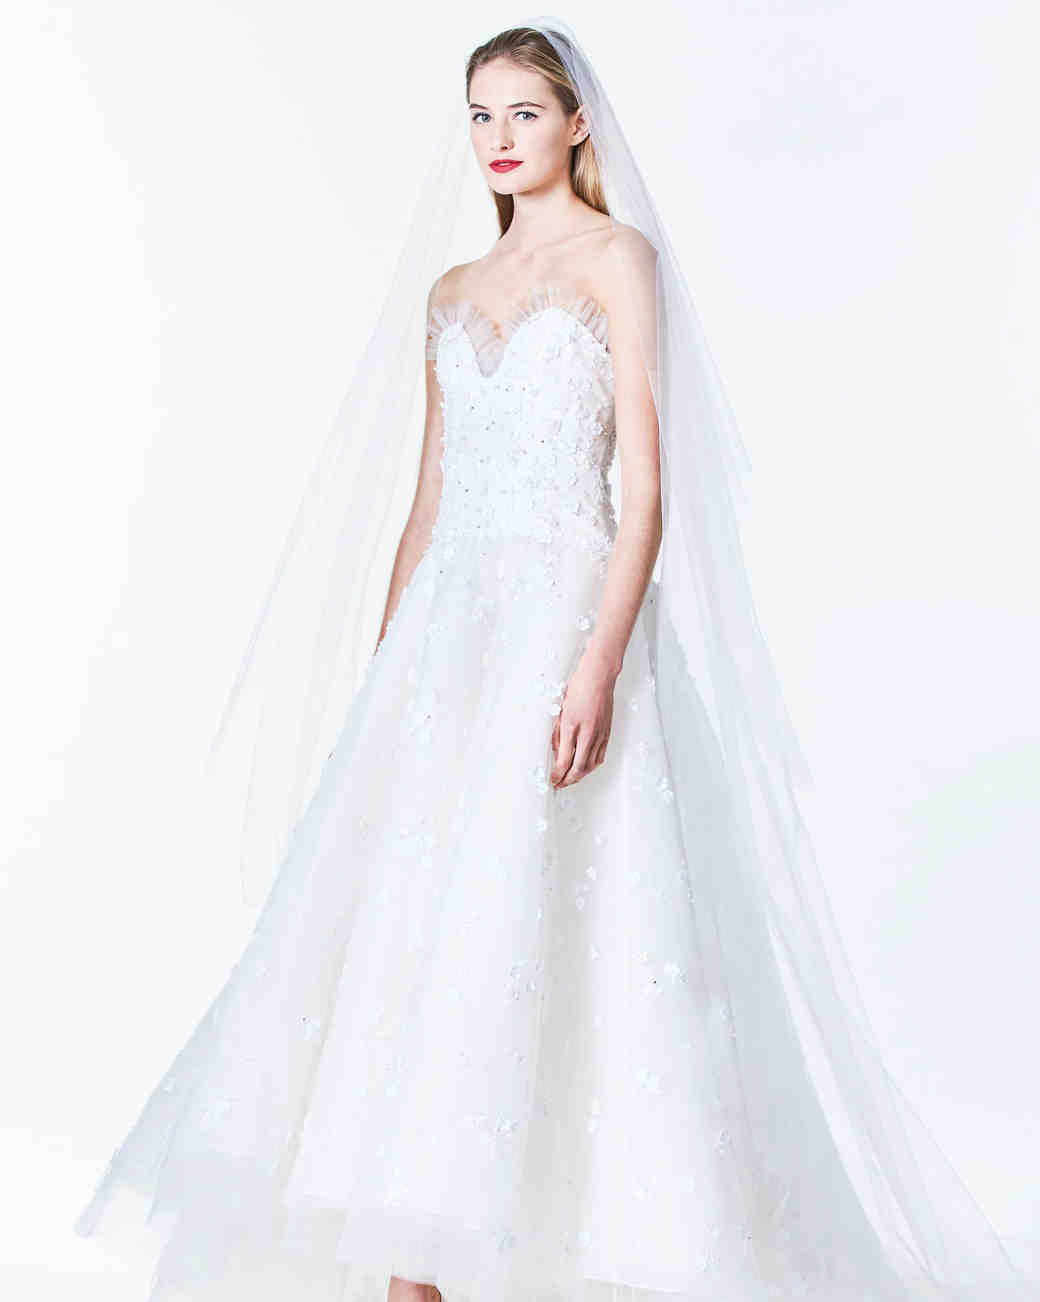 Great Carolina Herrera Wedding Dresses Prices in 2023 The ultimate guide 